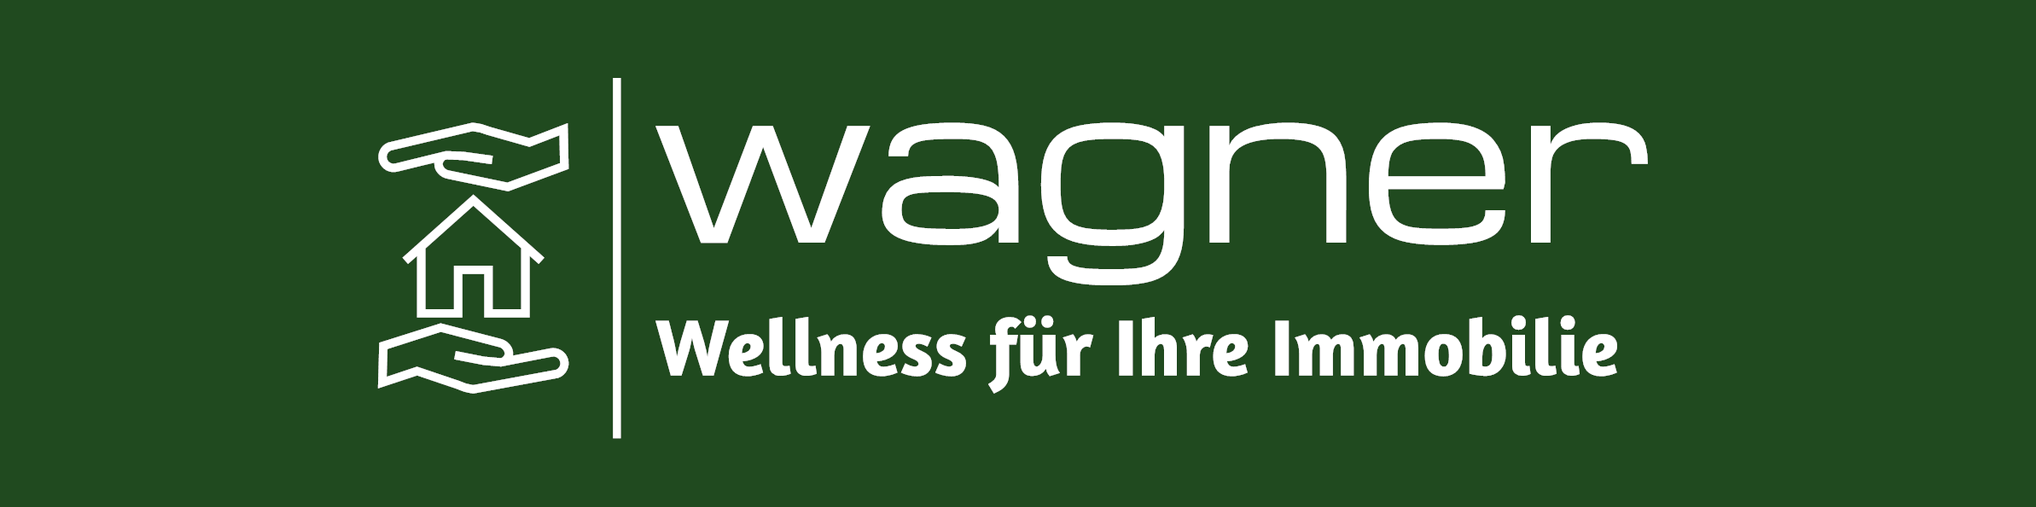 Wagner Immo-Wellness